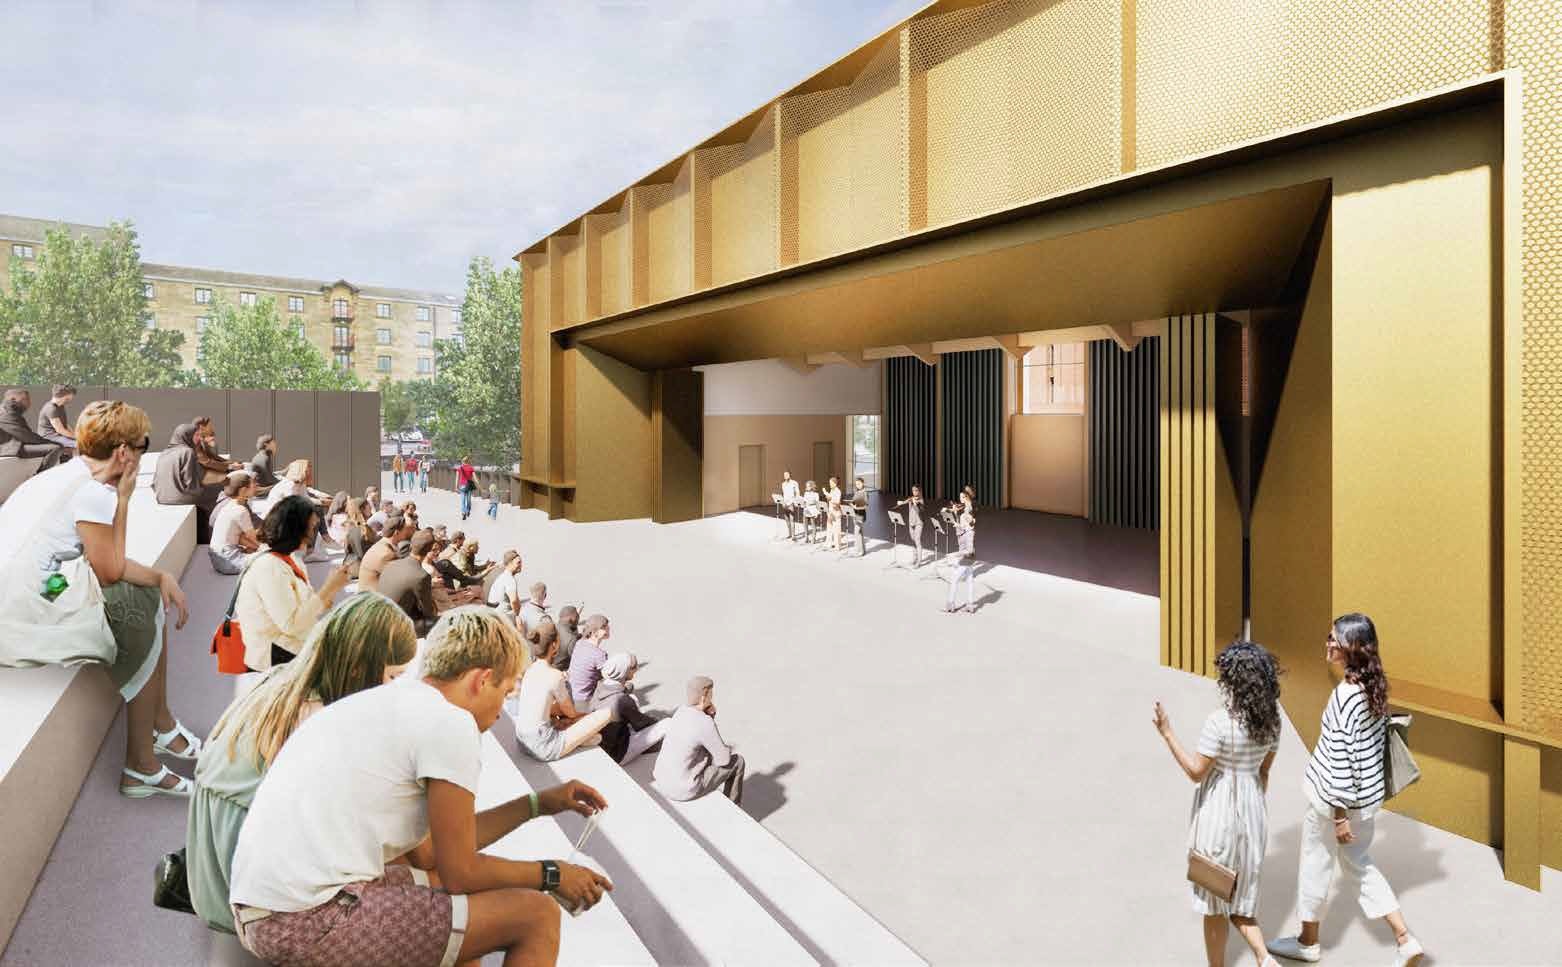 Scottish Opera submits detailed plans for mixed-use New Rotterdam Wharf regeneration